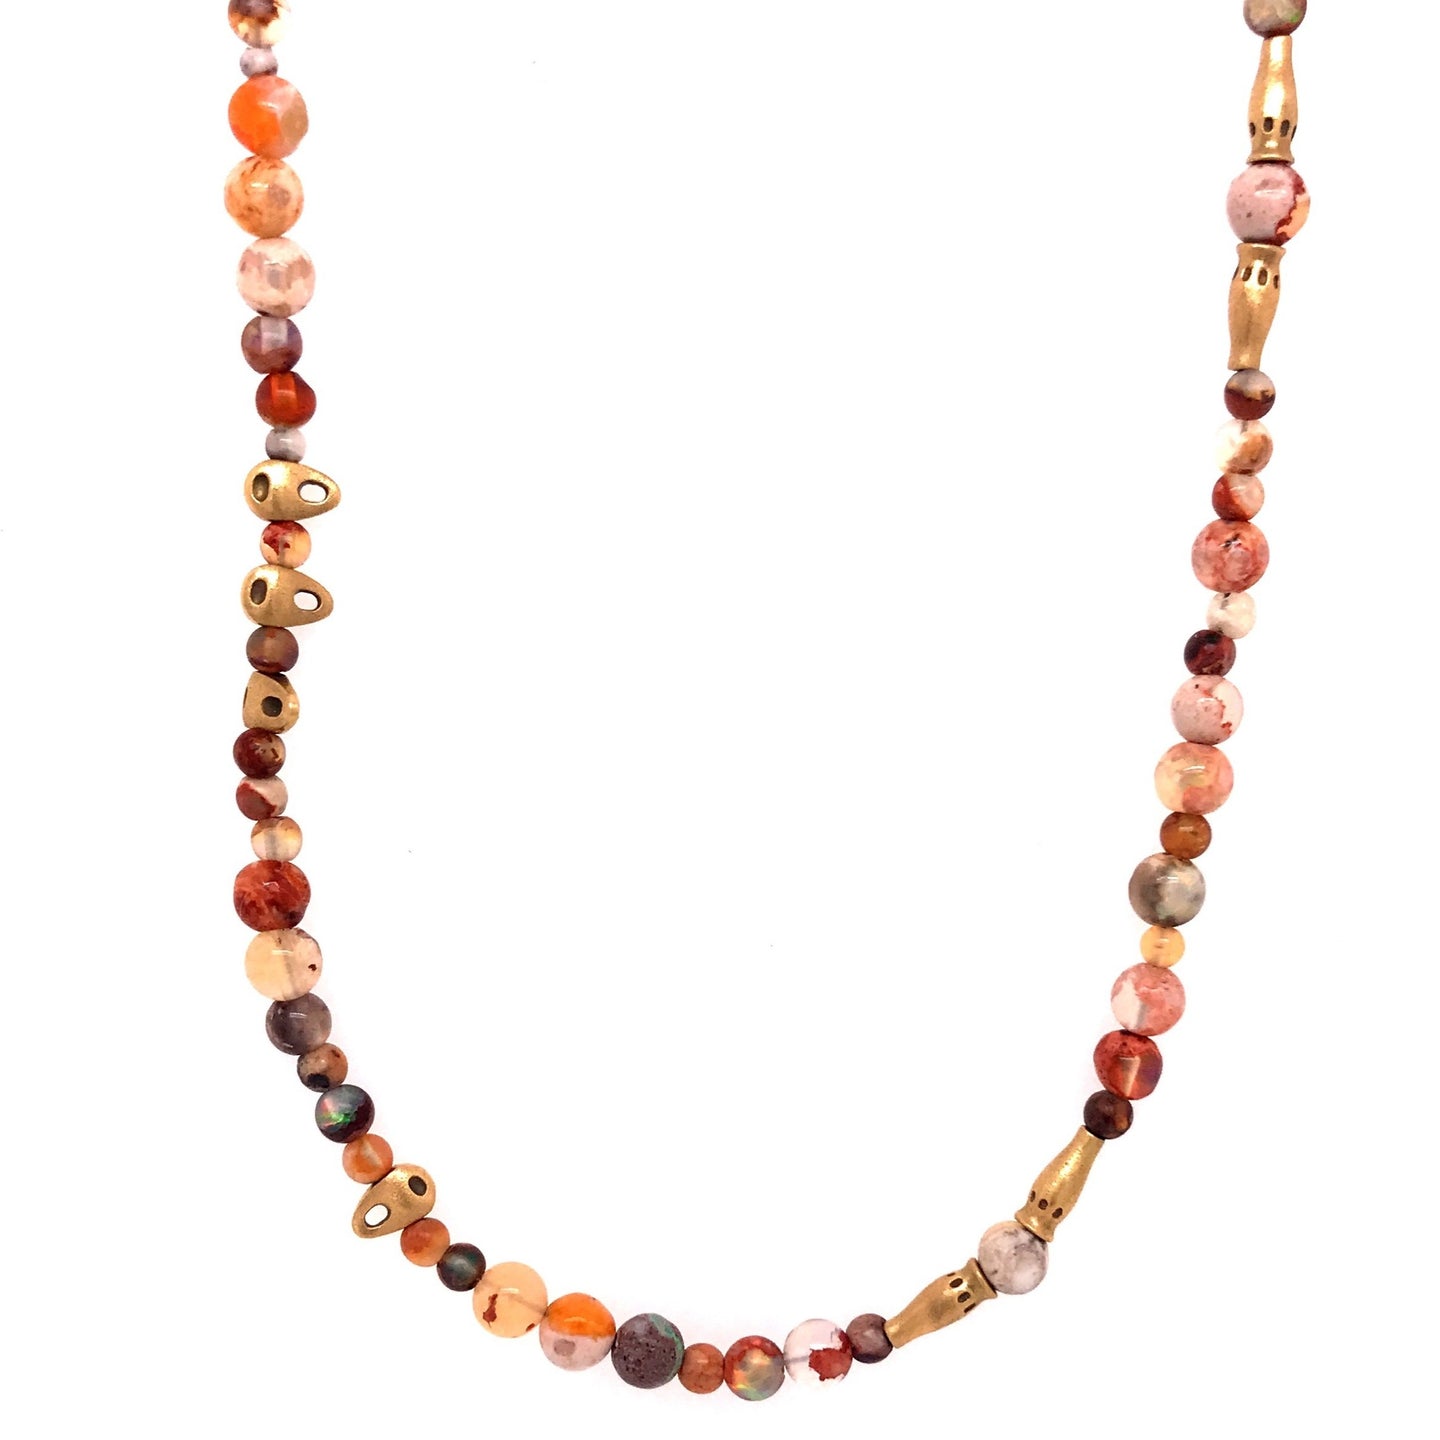 Fire Opal in Matrix Necklace